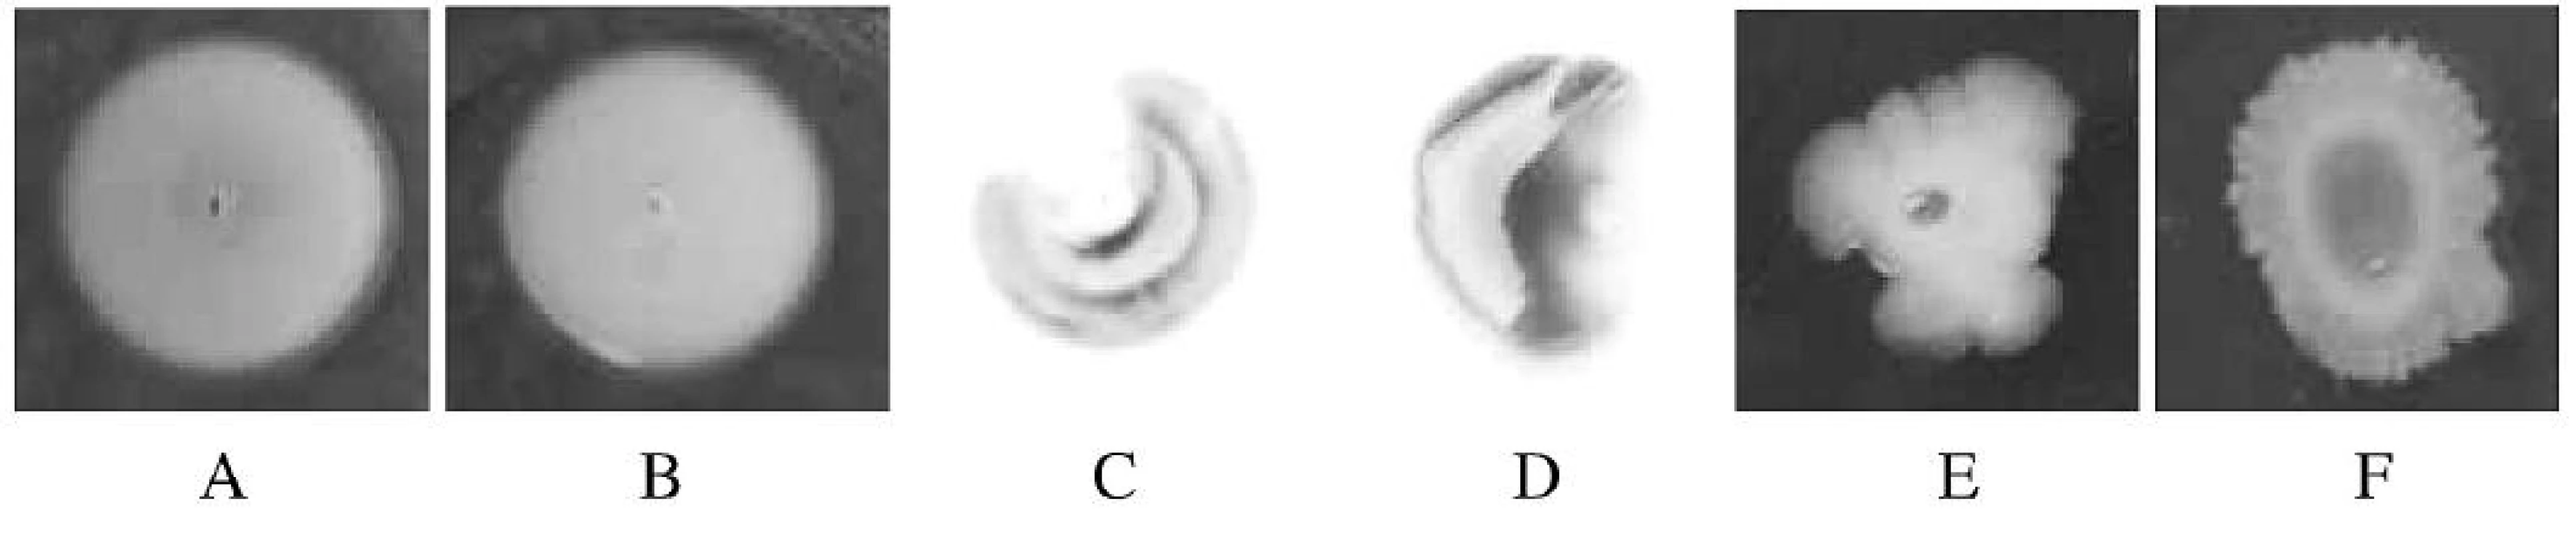 Test na swimming (A, B), twitching (C, D) a swarming (E, F) motilitu

Fig. 2. Swimming (A, B), twitching (C, D), and swarming (E, F) motility assays